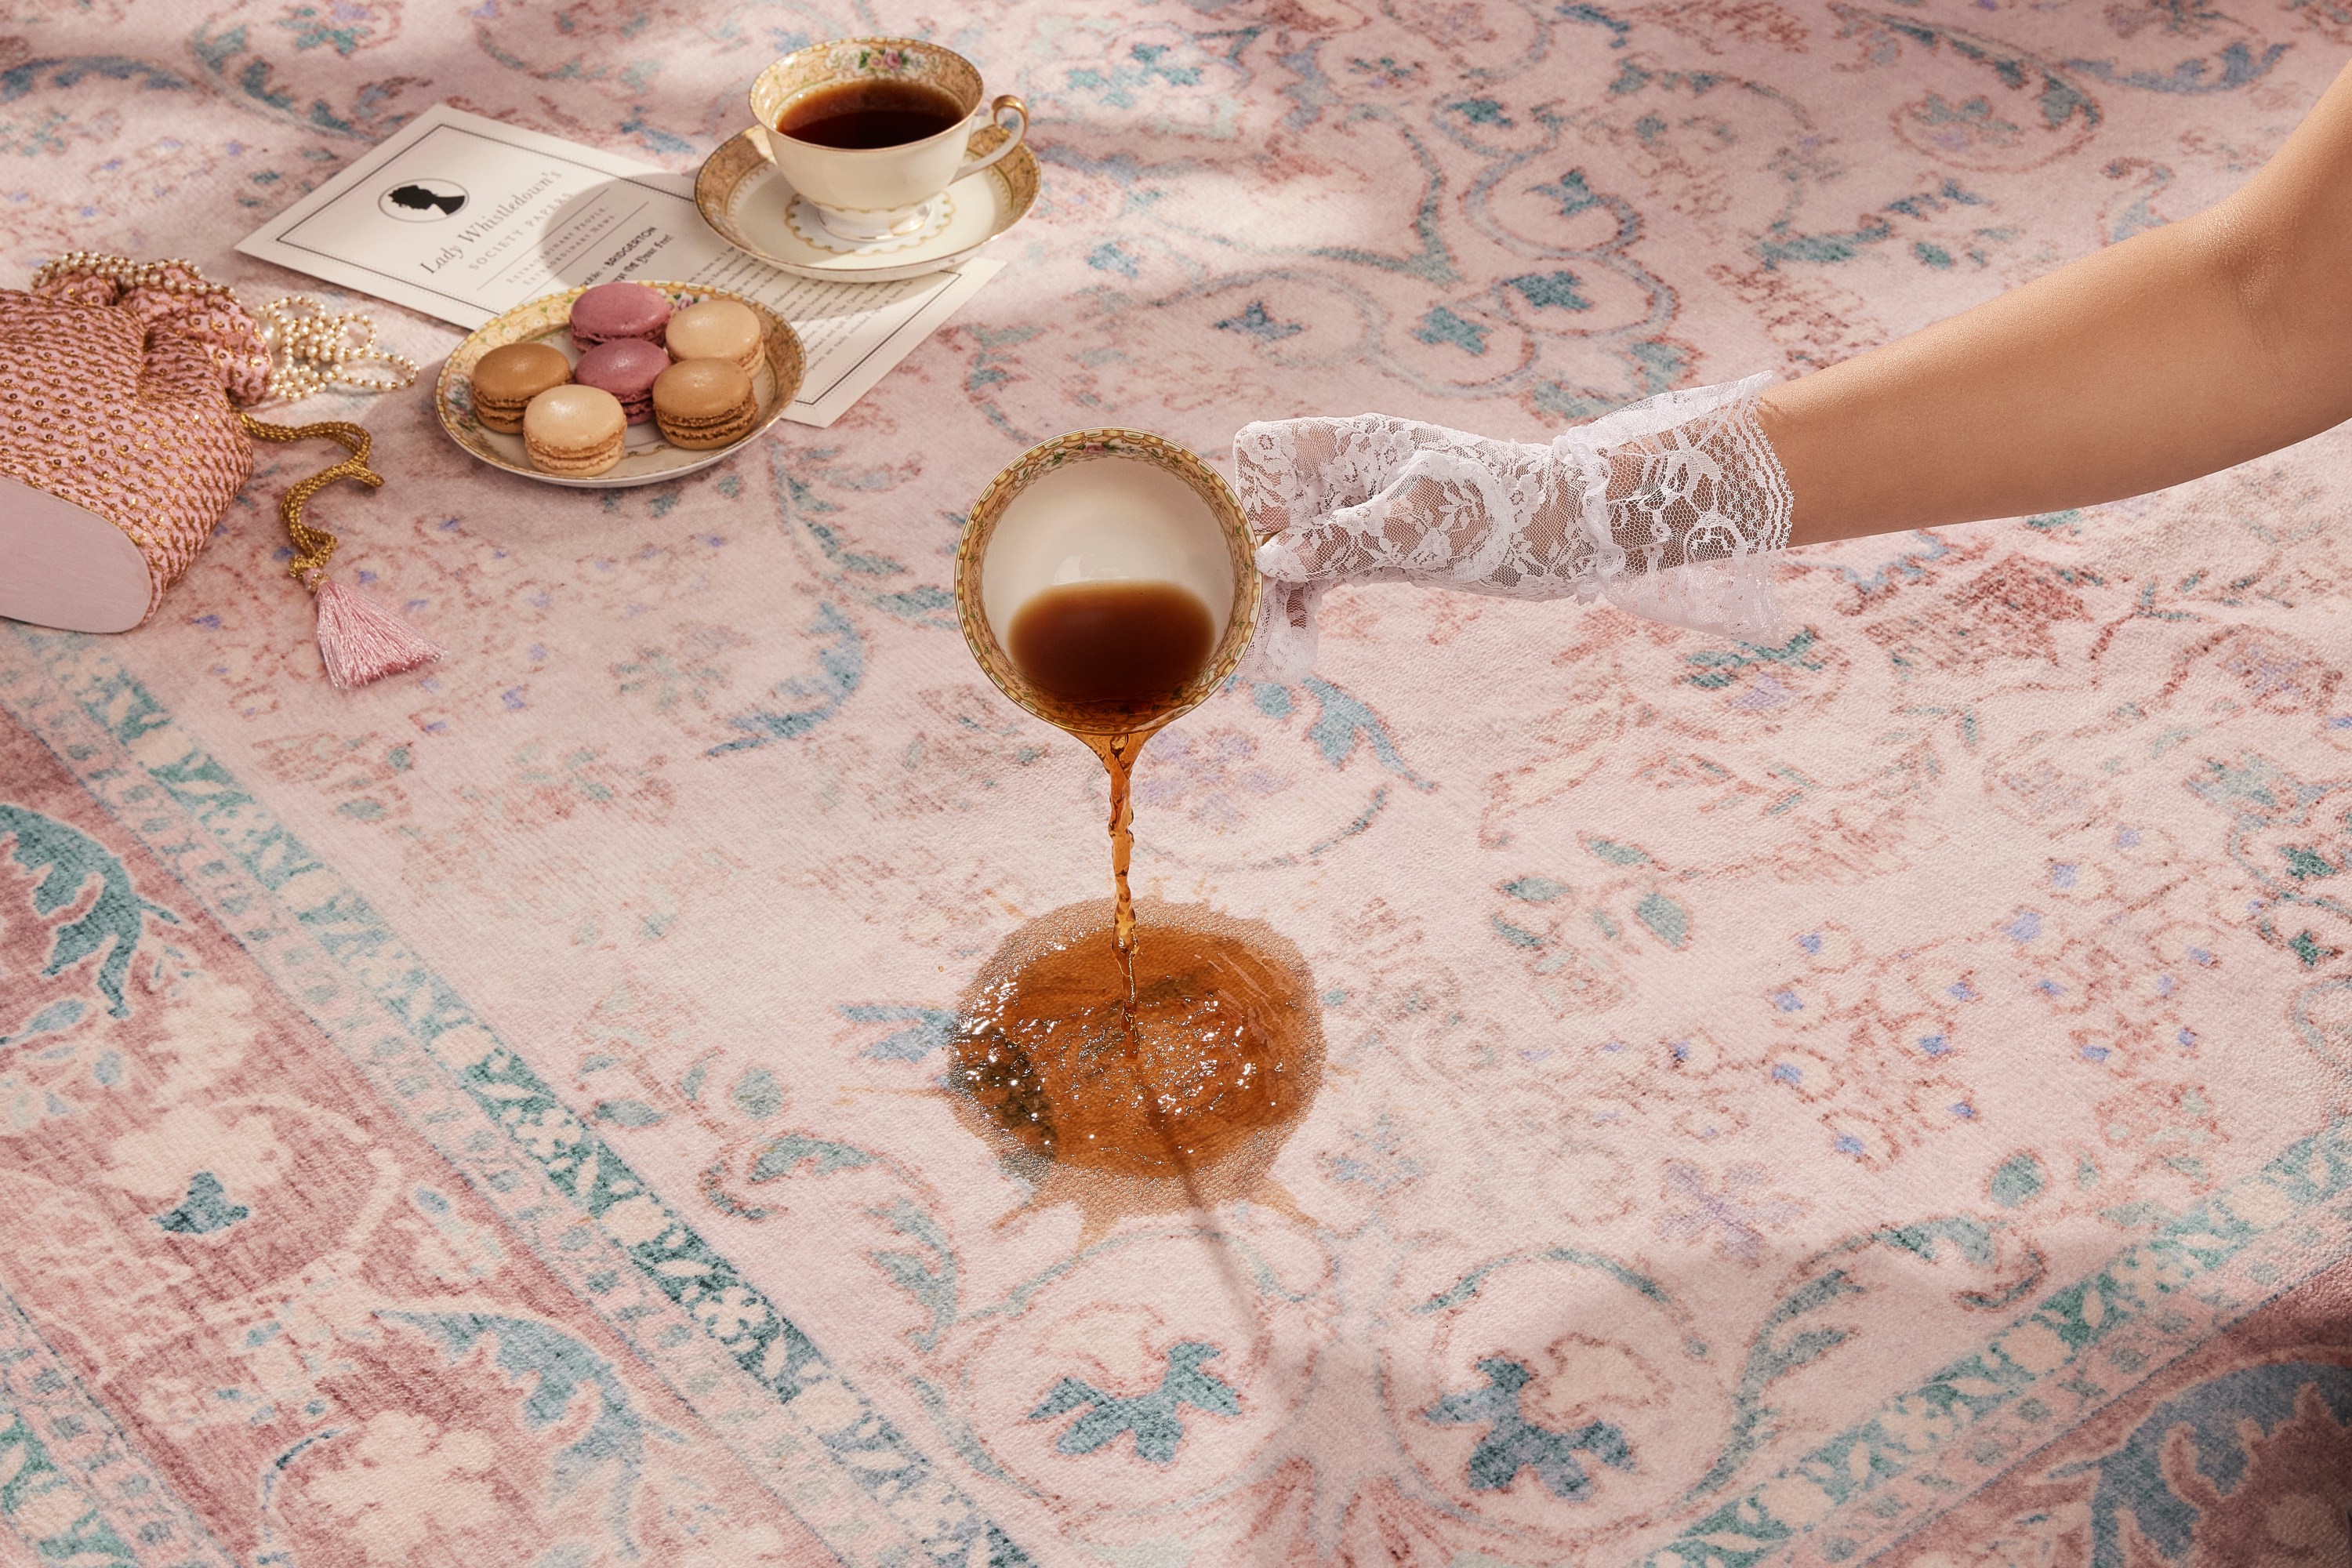 A laced glove hand spills tea on a blush pink rug.